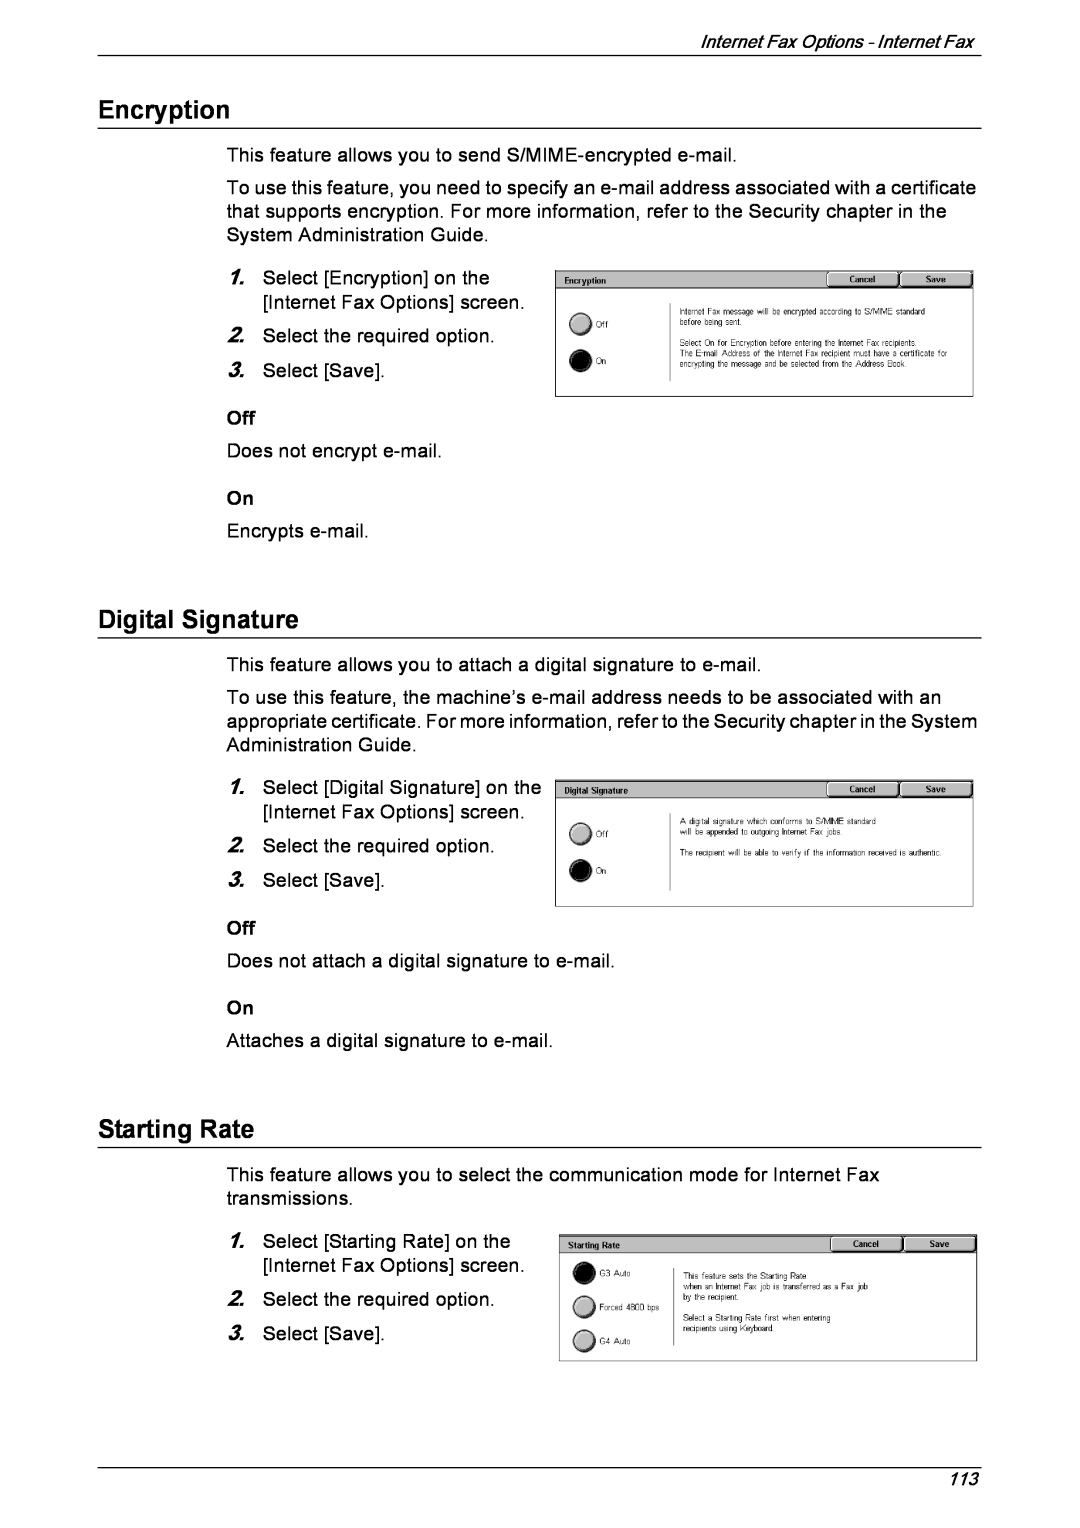 Xerox 5230 manual Encryption, Digital Signature, Starting Rate 